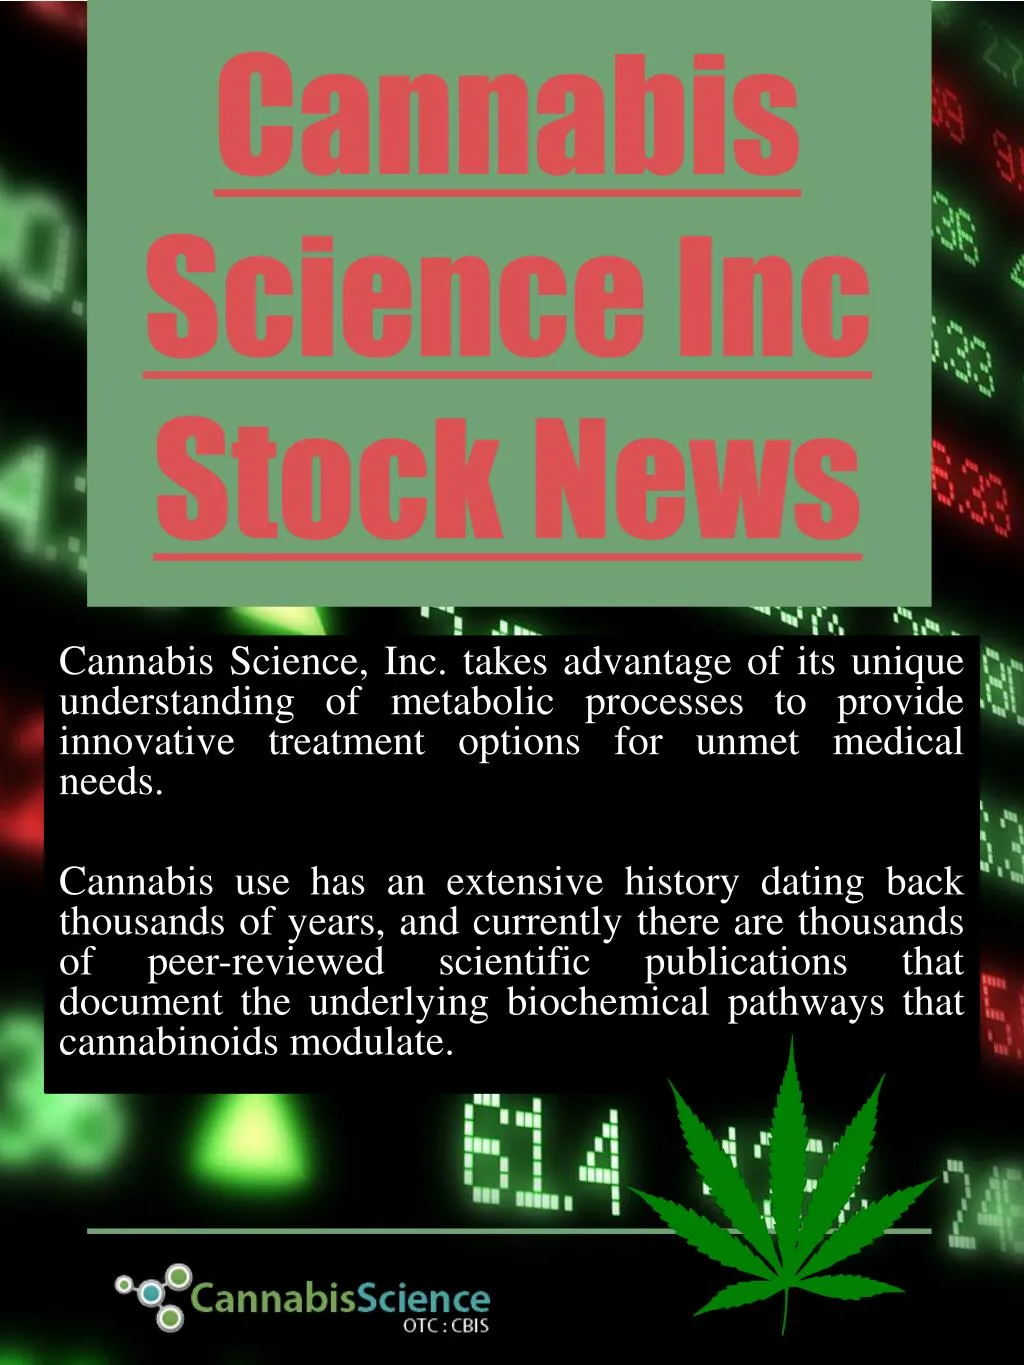 cannabis science inc stock news